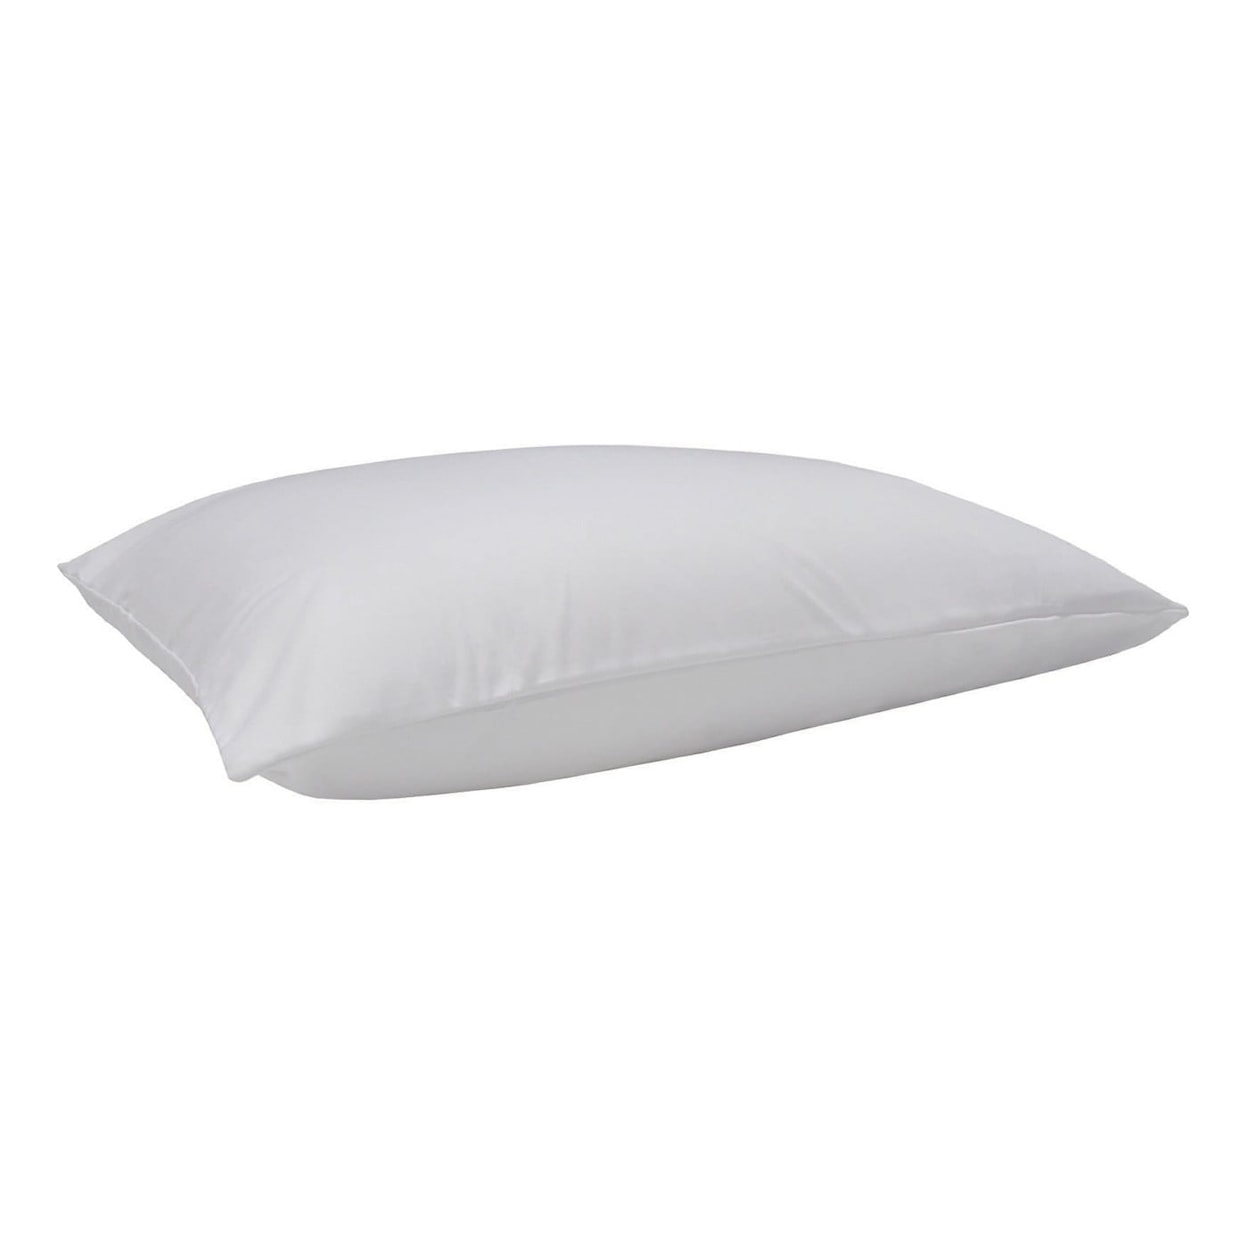 Bedgear iProtect Pillow Protector Pillow Protector - Jumbo/Queen